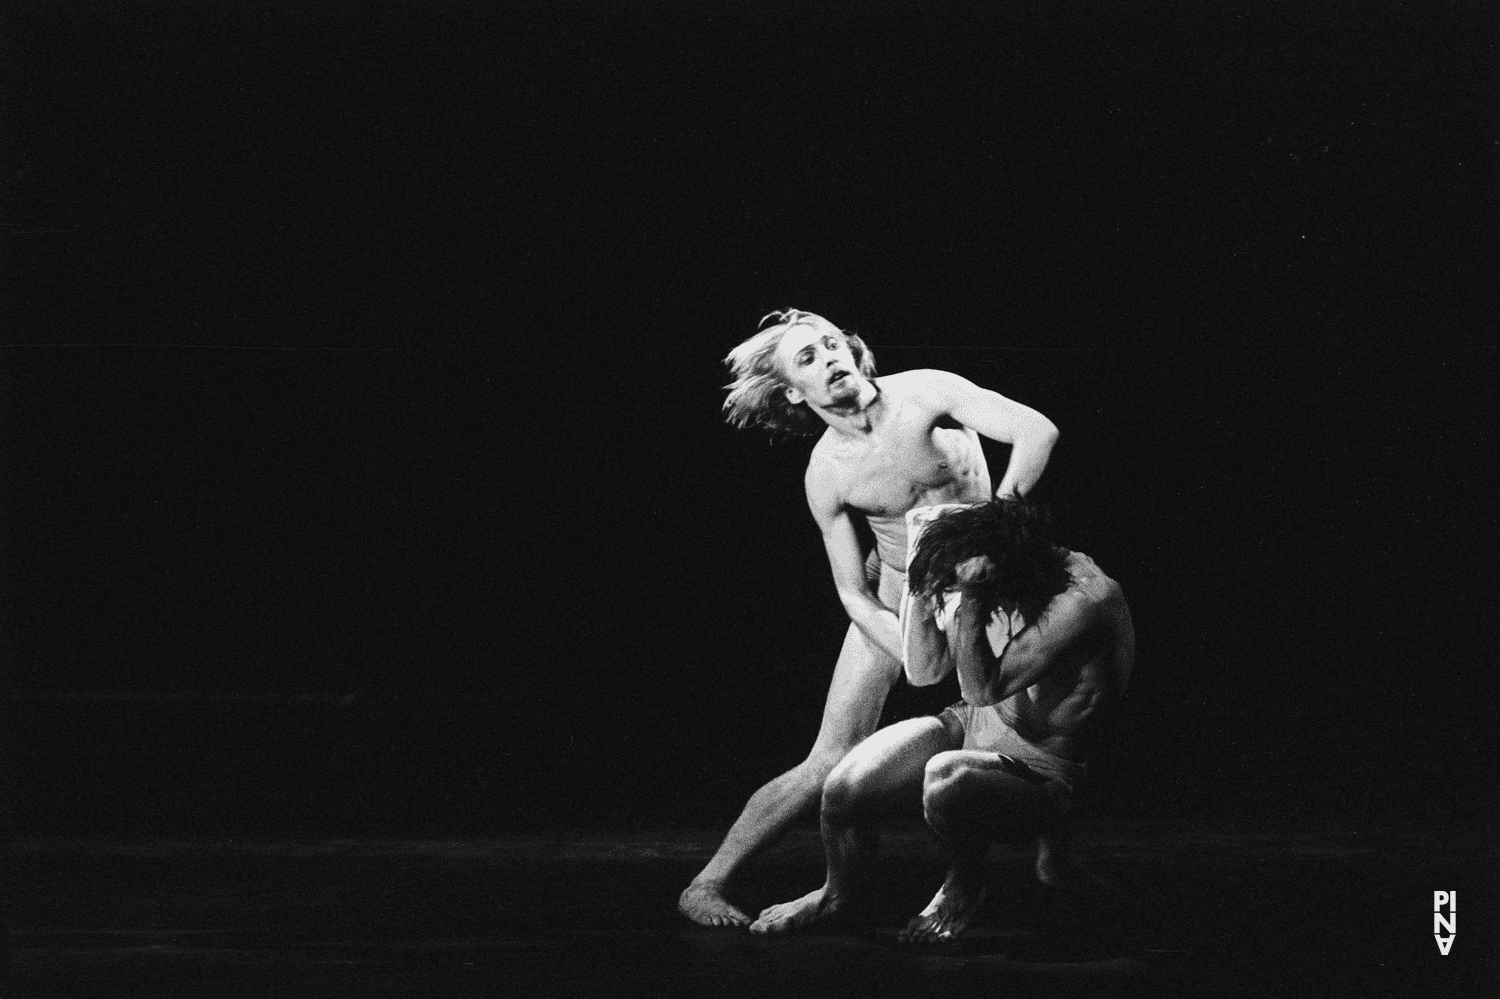 Dominique Mercy and Ed Kortlandt in “Iphigenie auf Tauris” by Pina Bausch at Opernhaus Wuppertal, season 1973/74